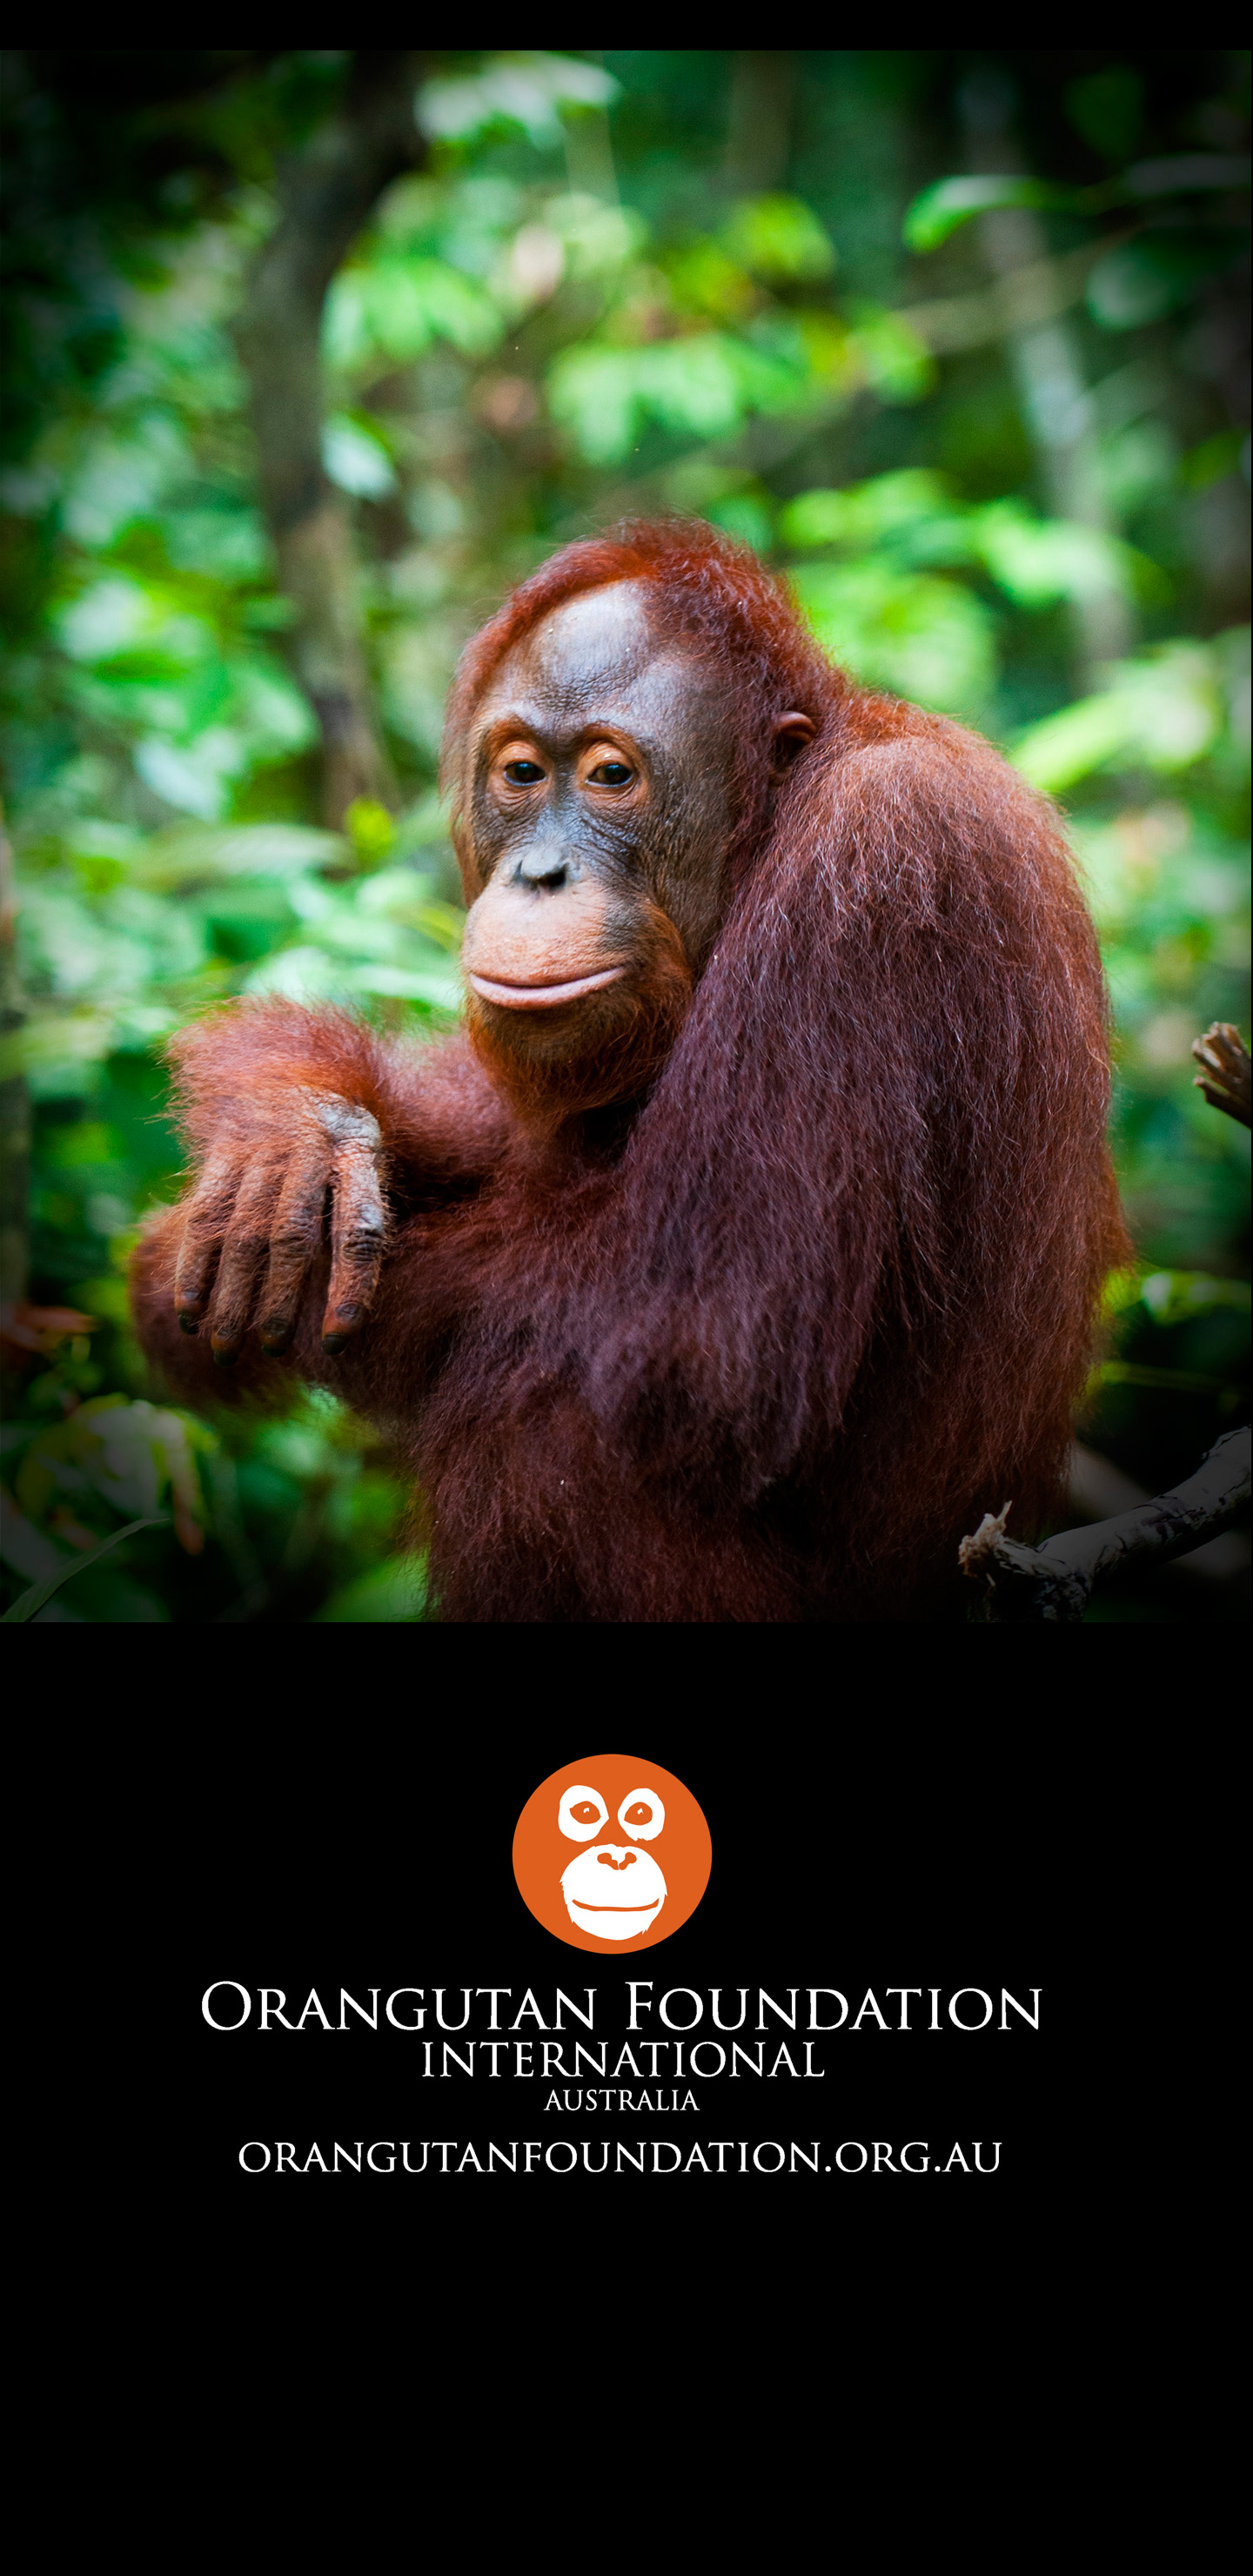 Baby Orangutan Wallpaper  HD Wallpapers of Baby OrangutansAmazoncomAppstore  for Android